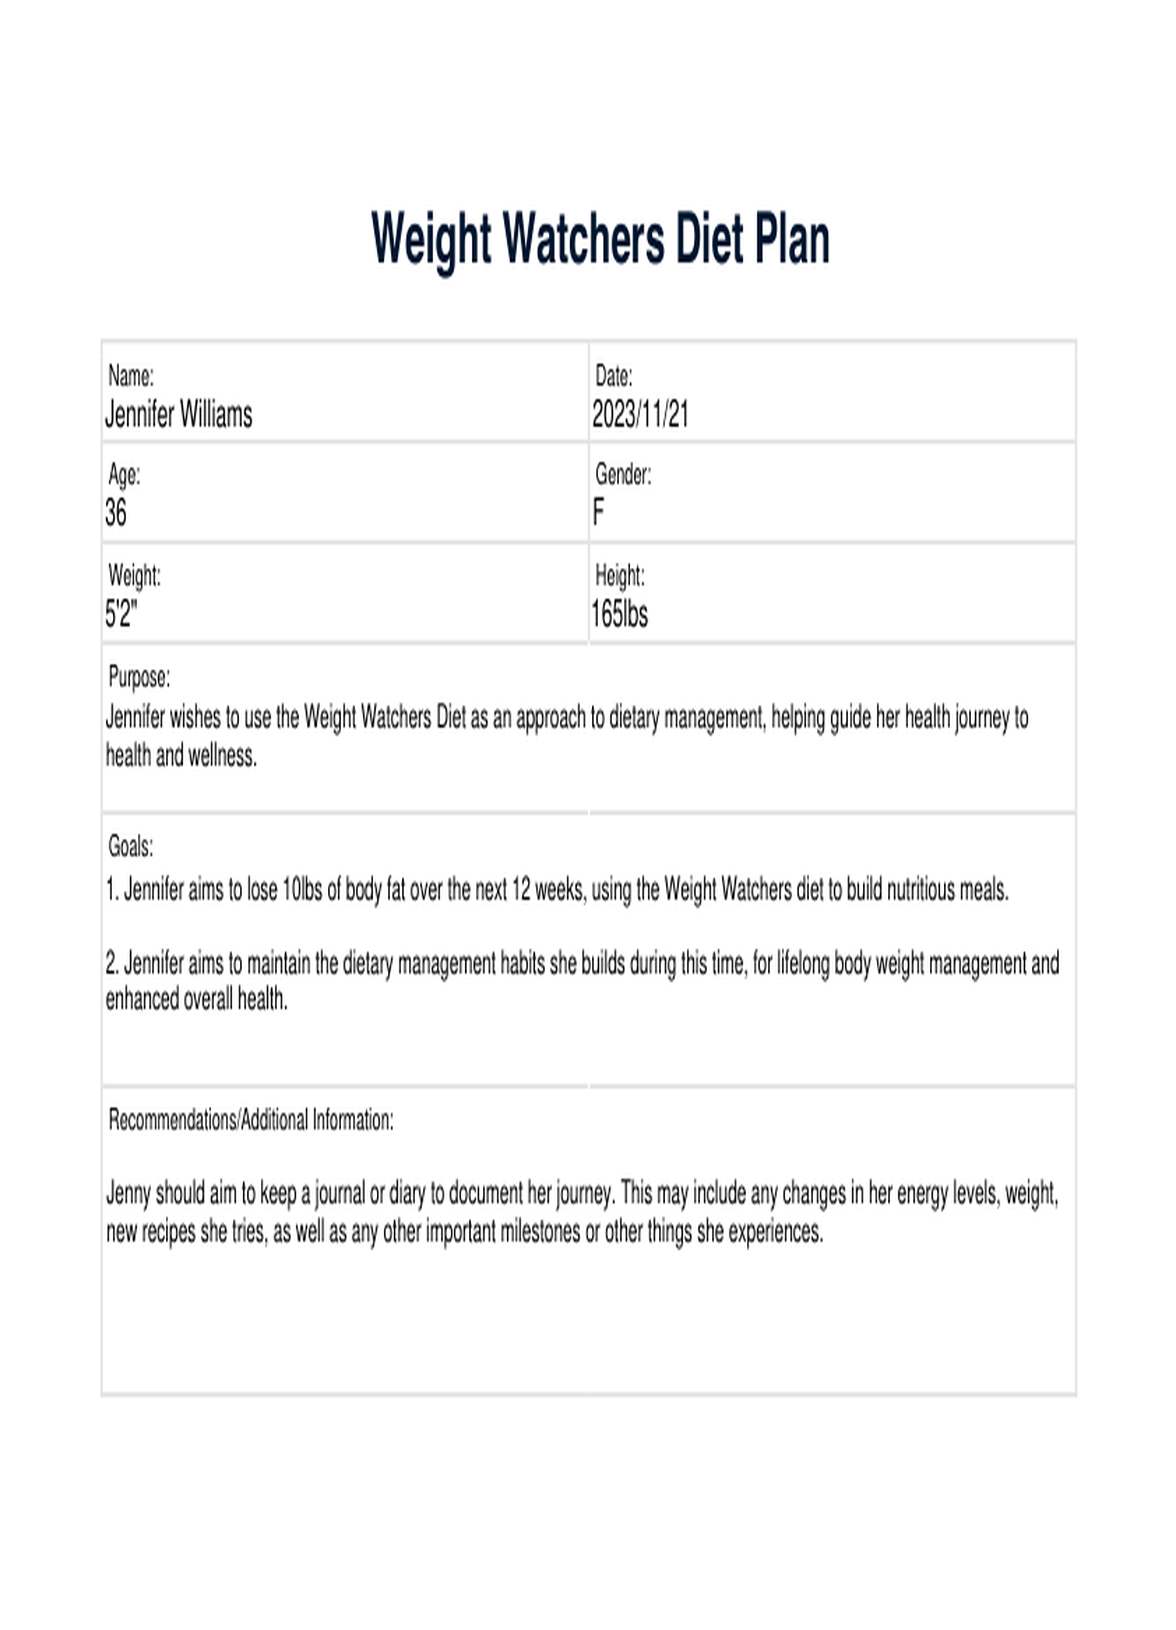 Weight Watchers Diet PDF Example